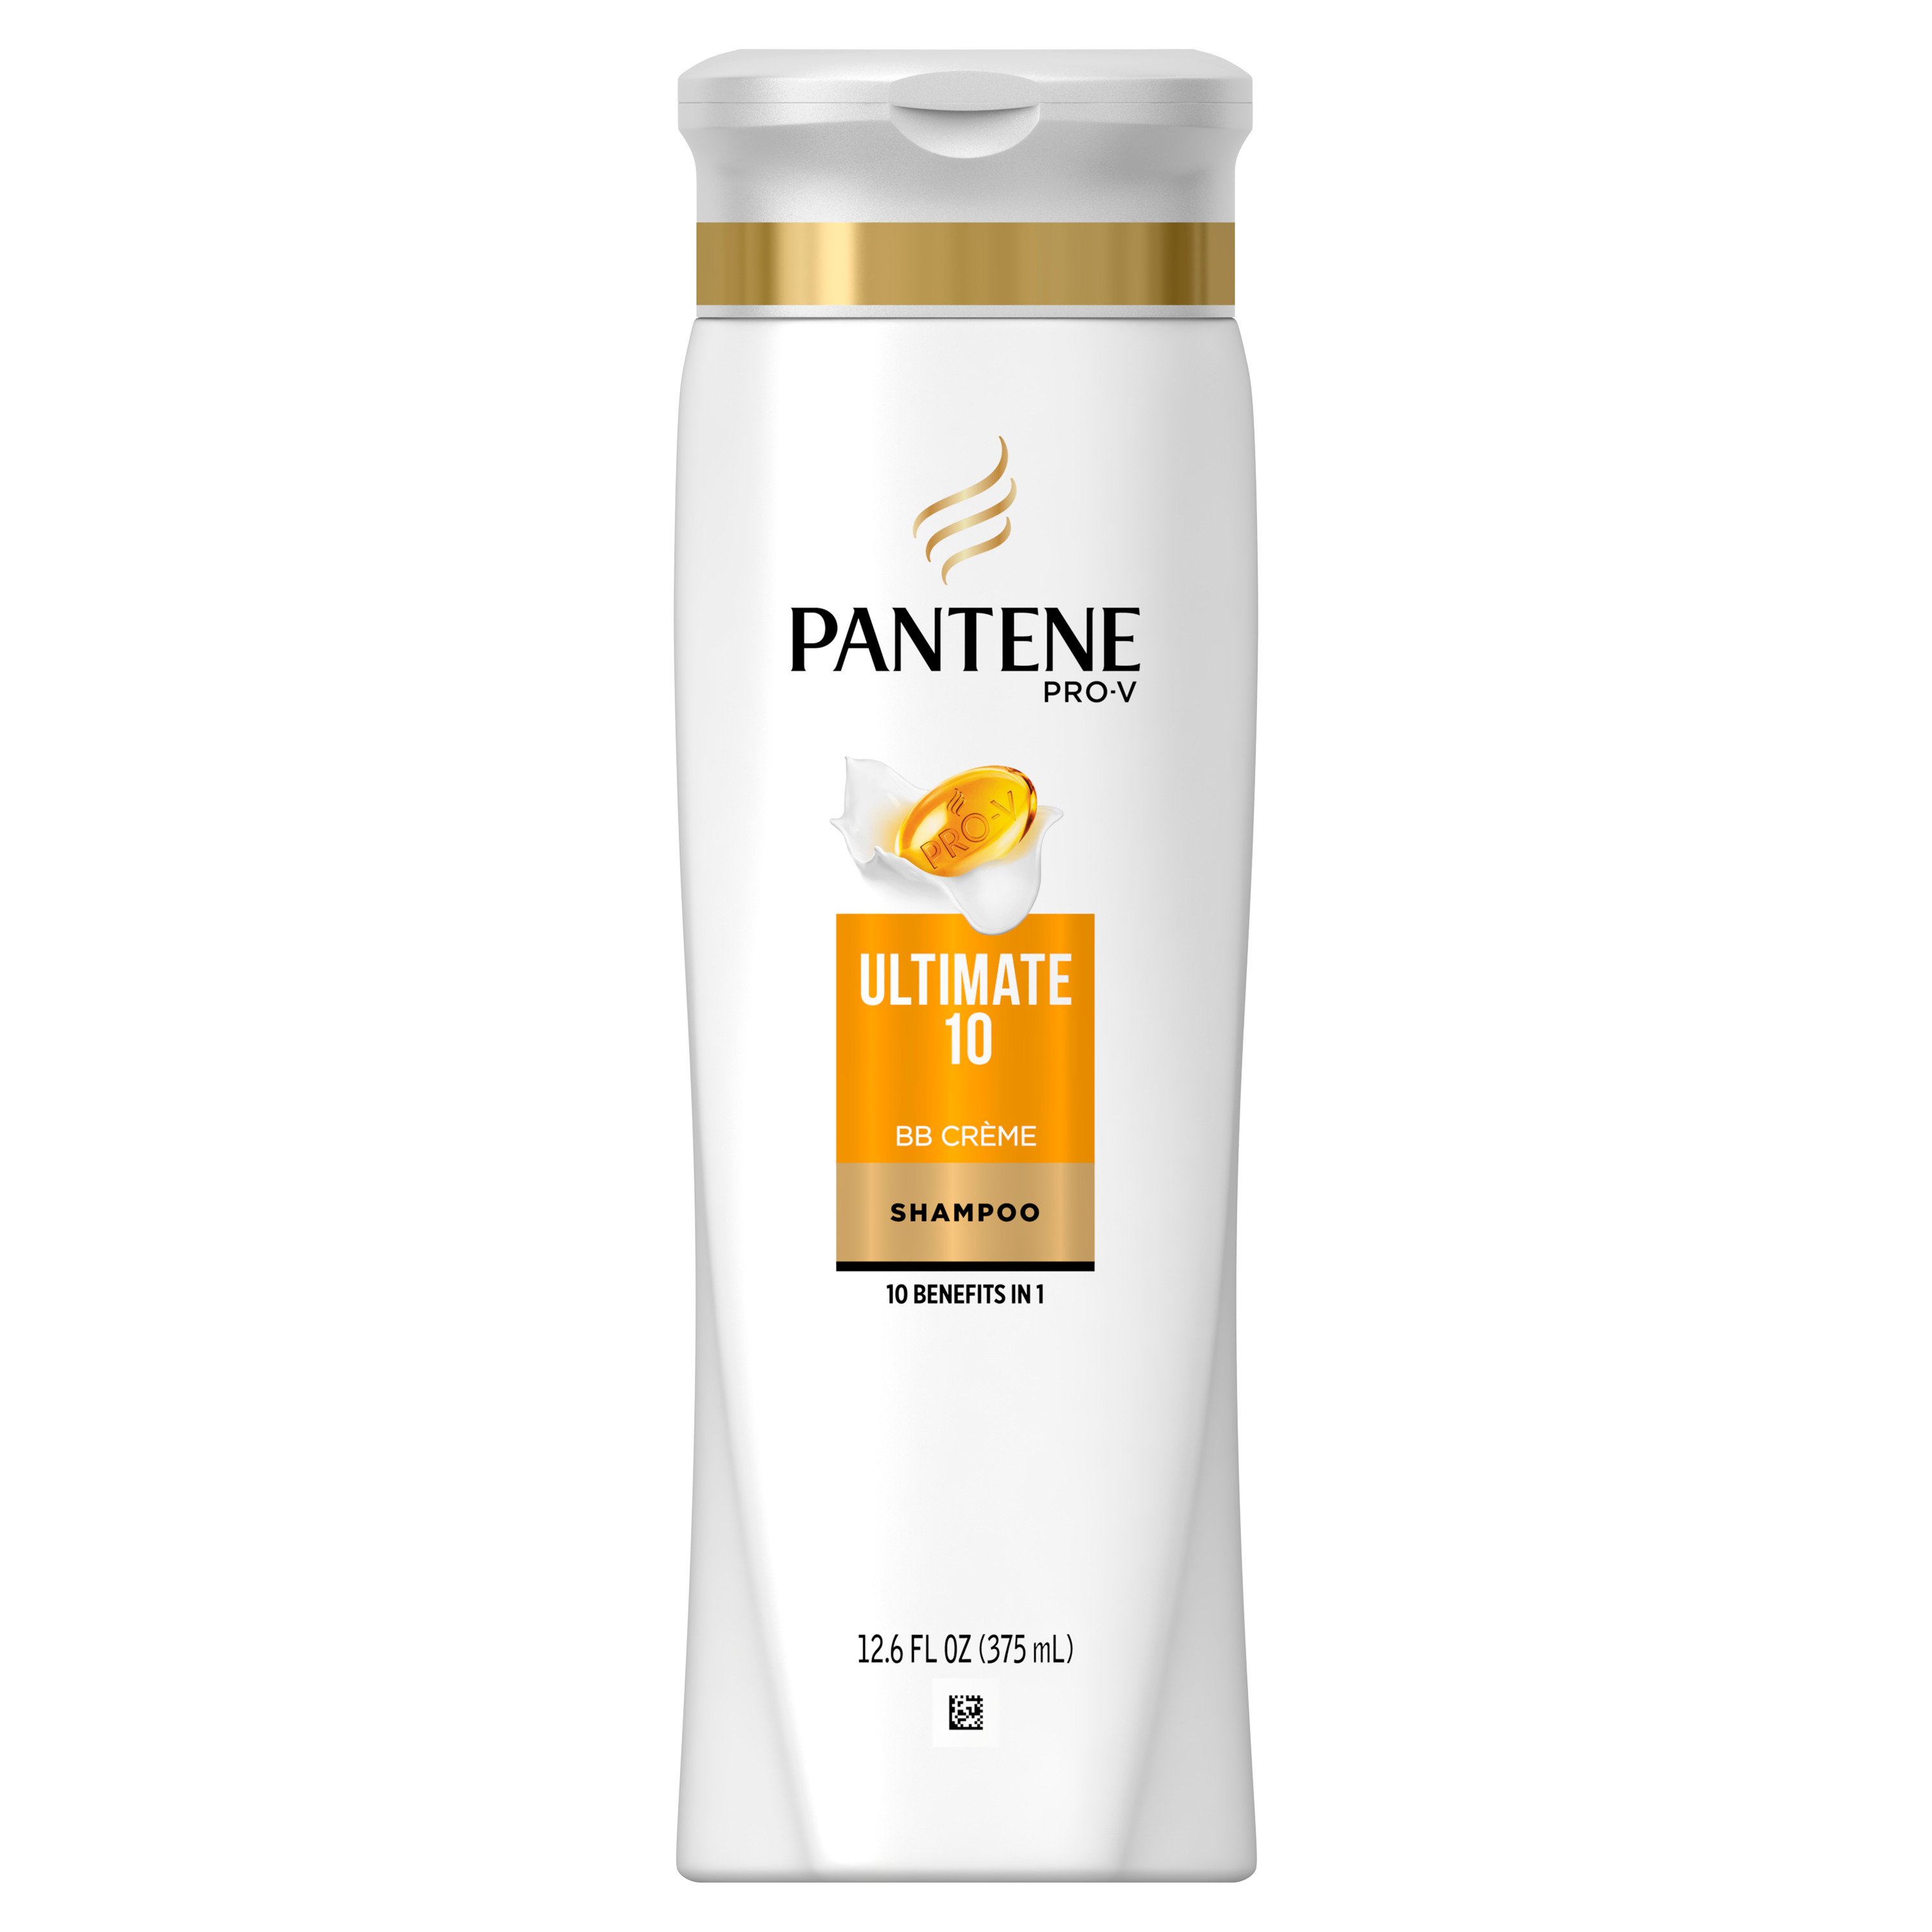 Pantene Pro V Ultimate 10 Shampoo Shop Shampoo Conditioner At H E B